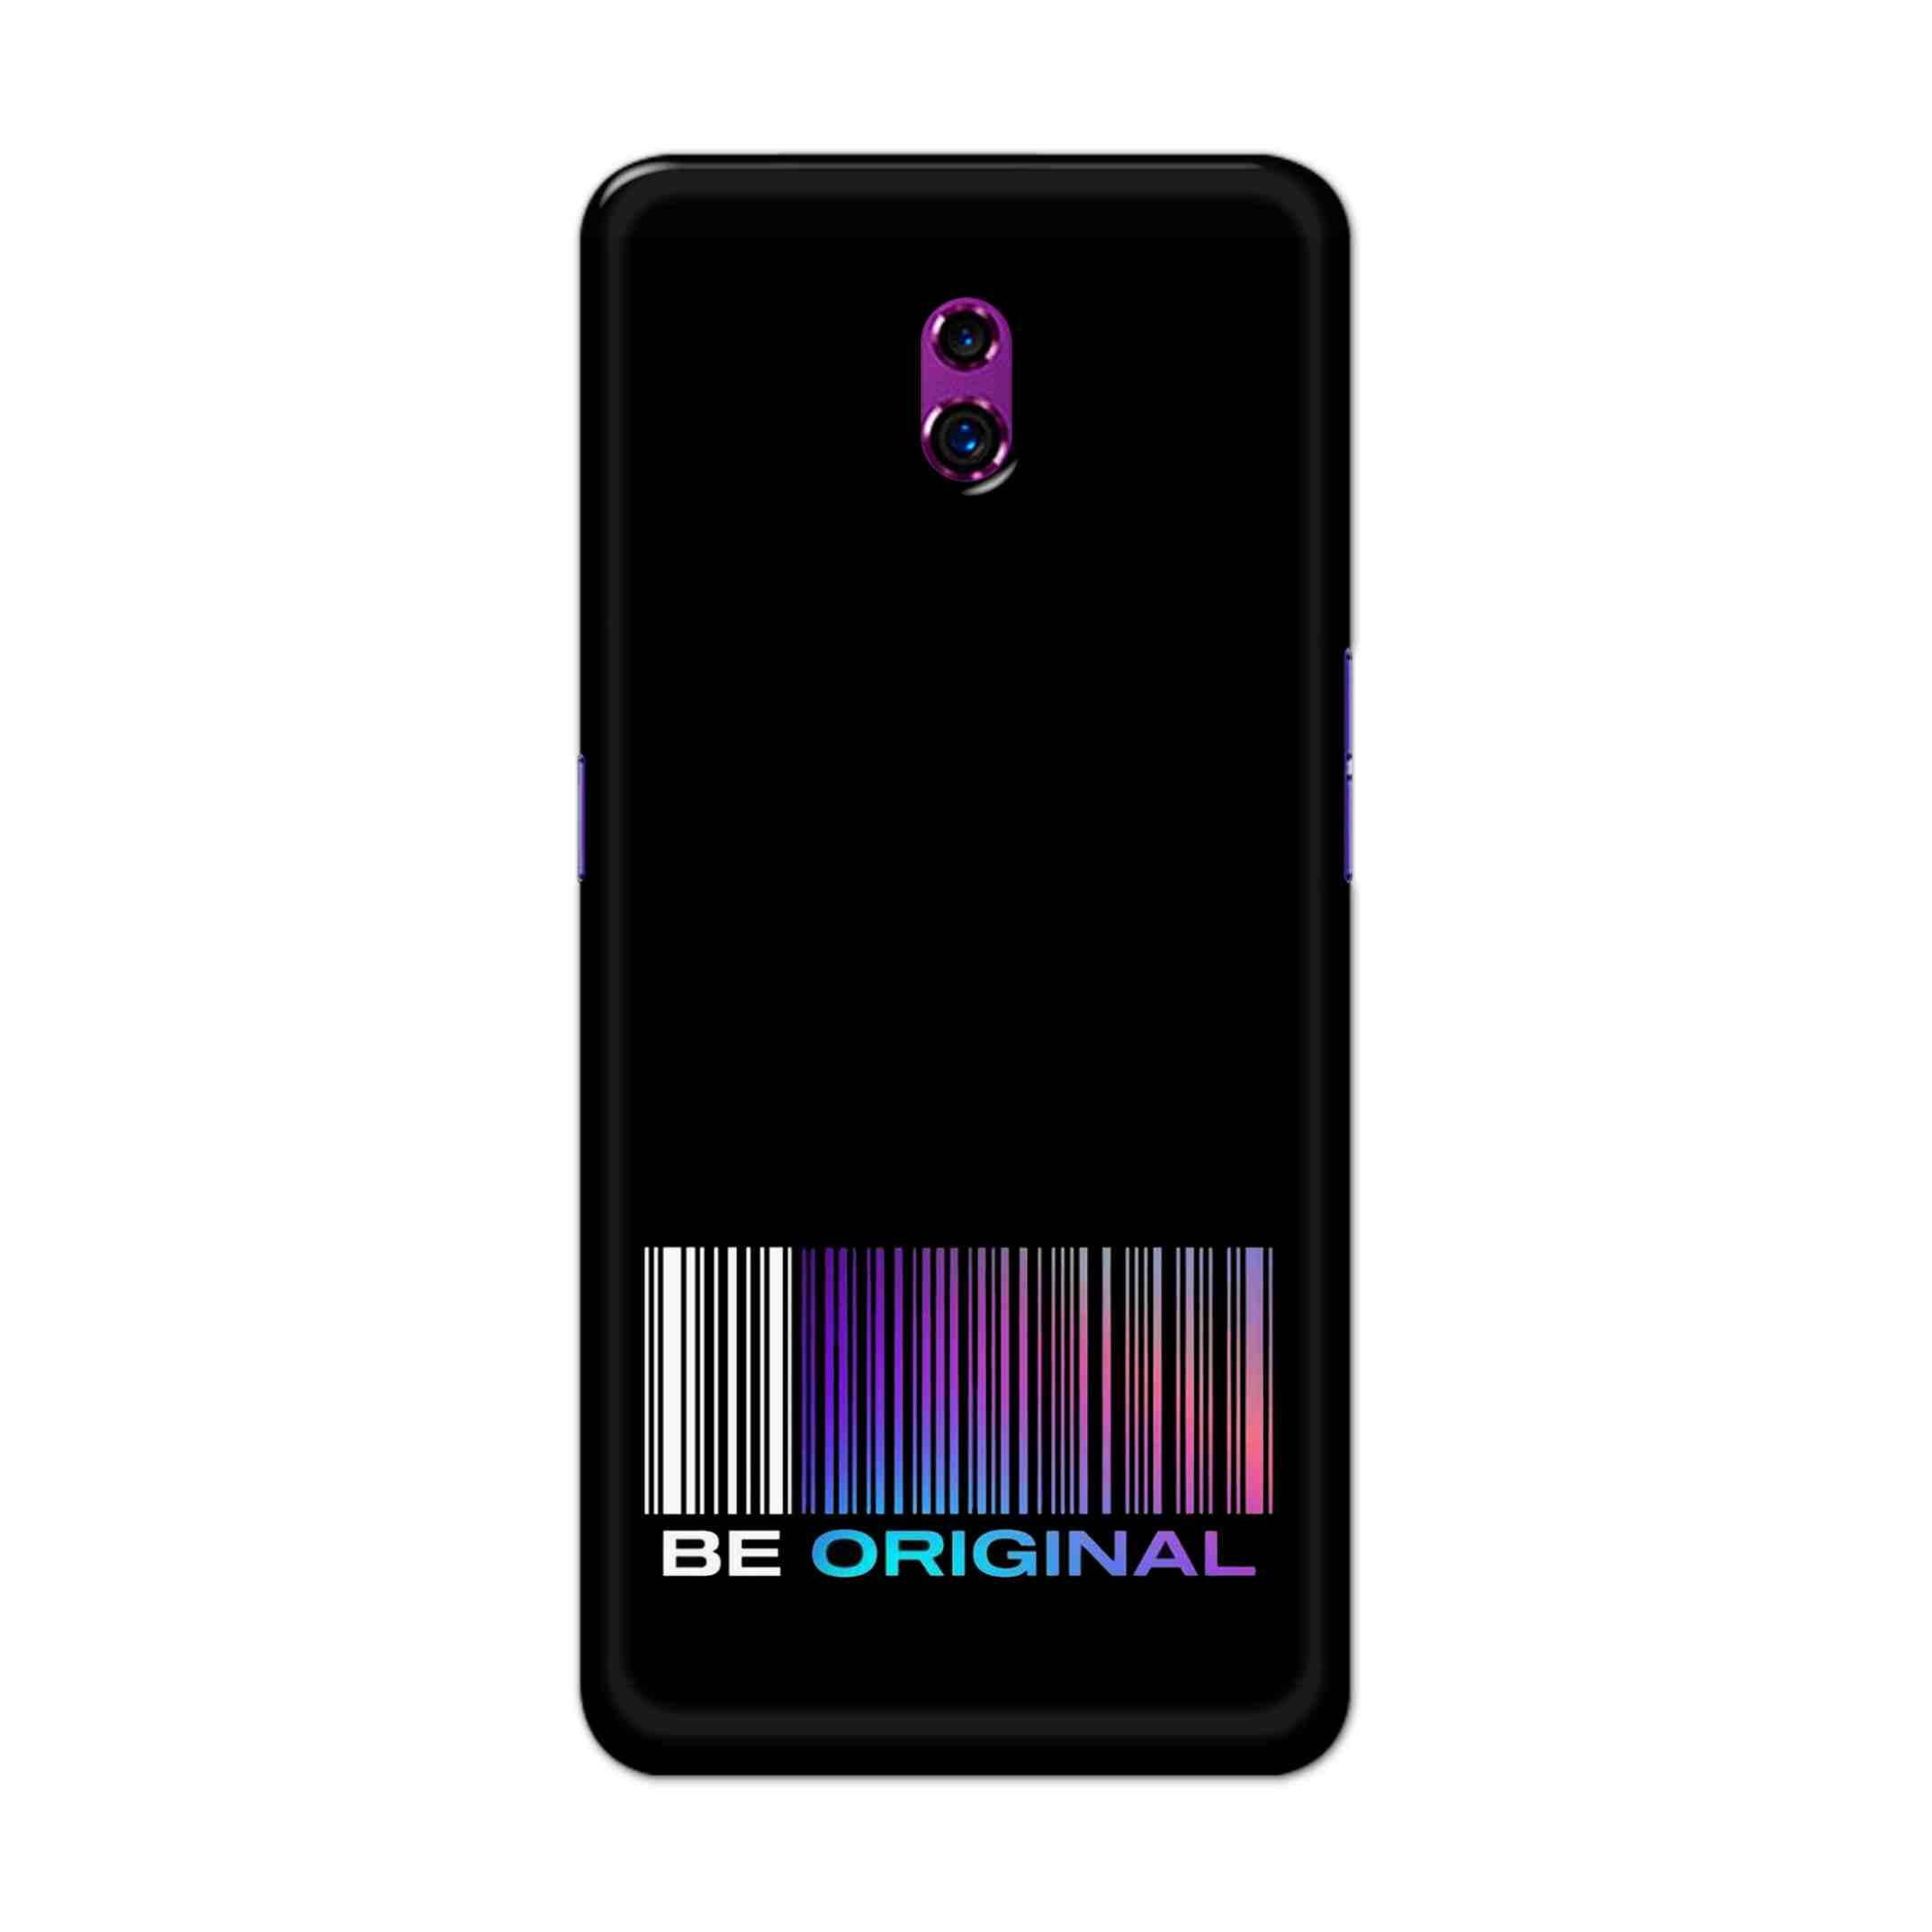 Buy Be Original Hard Back Mobile Phone Case Cover For Oppo Reno Online